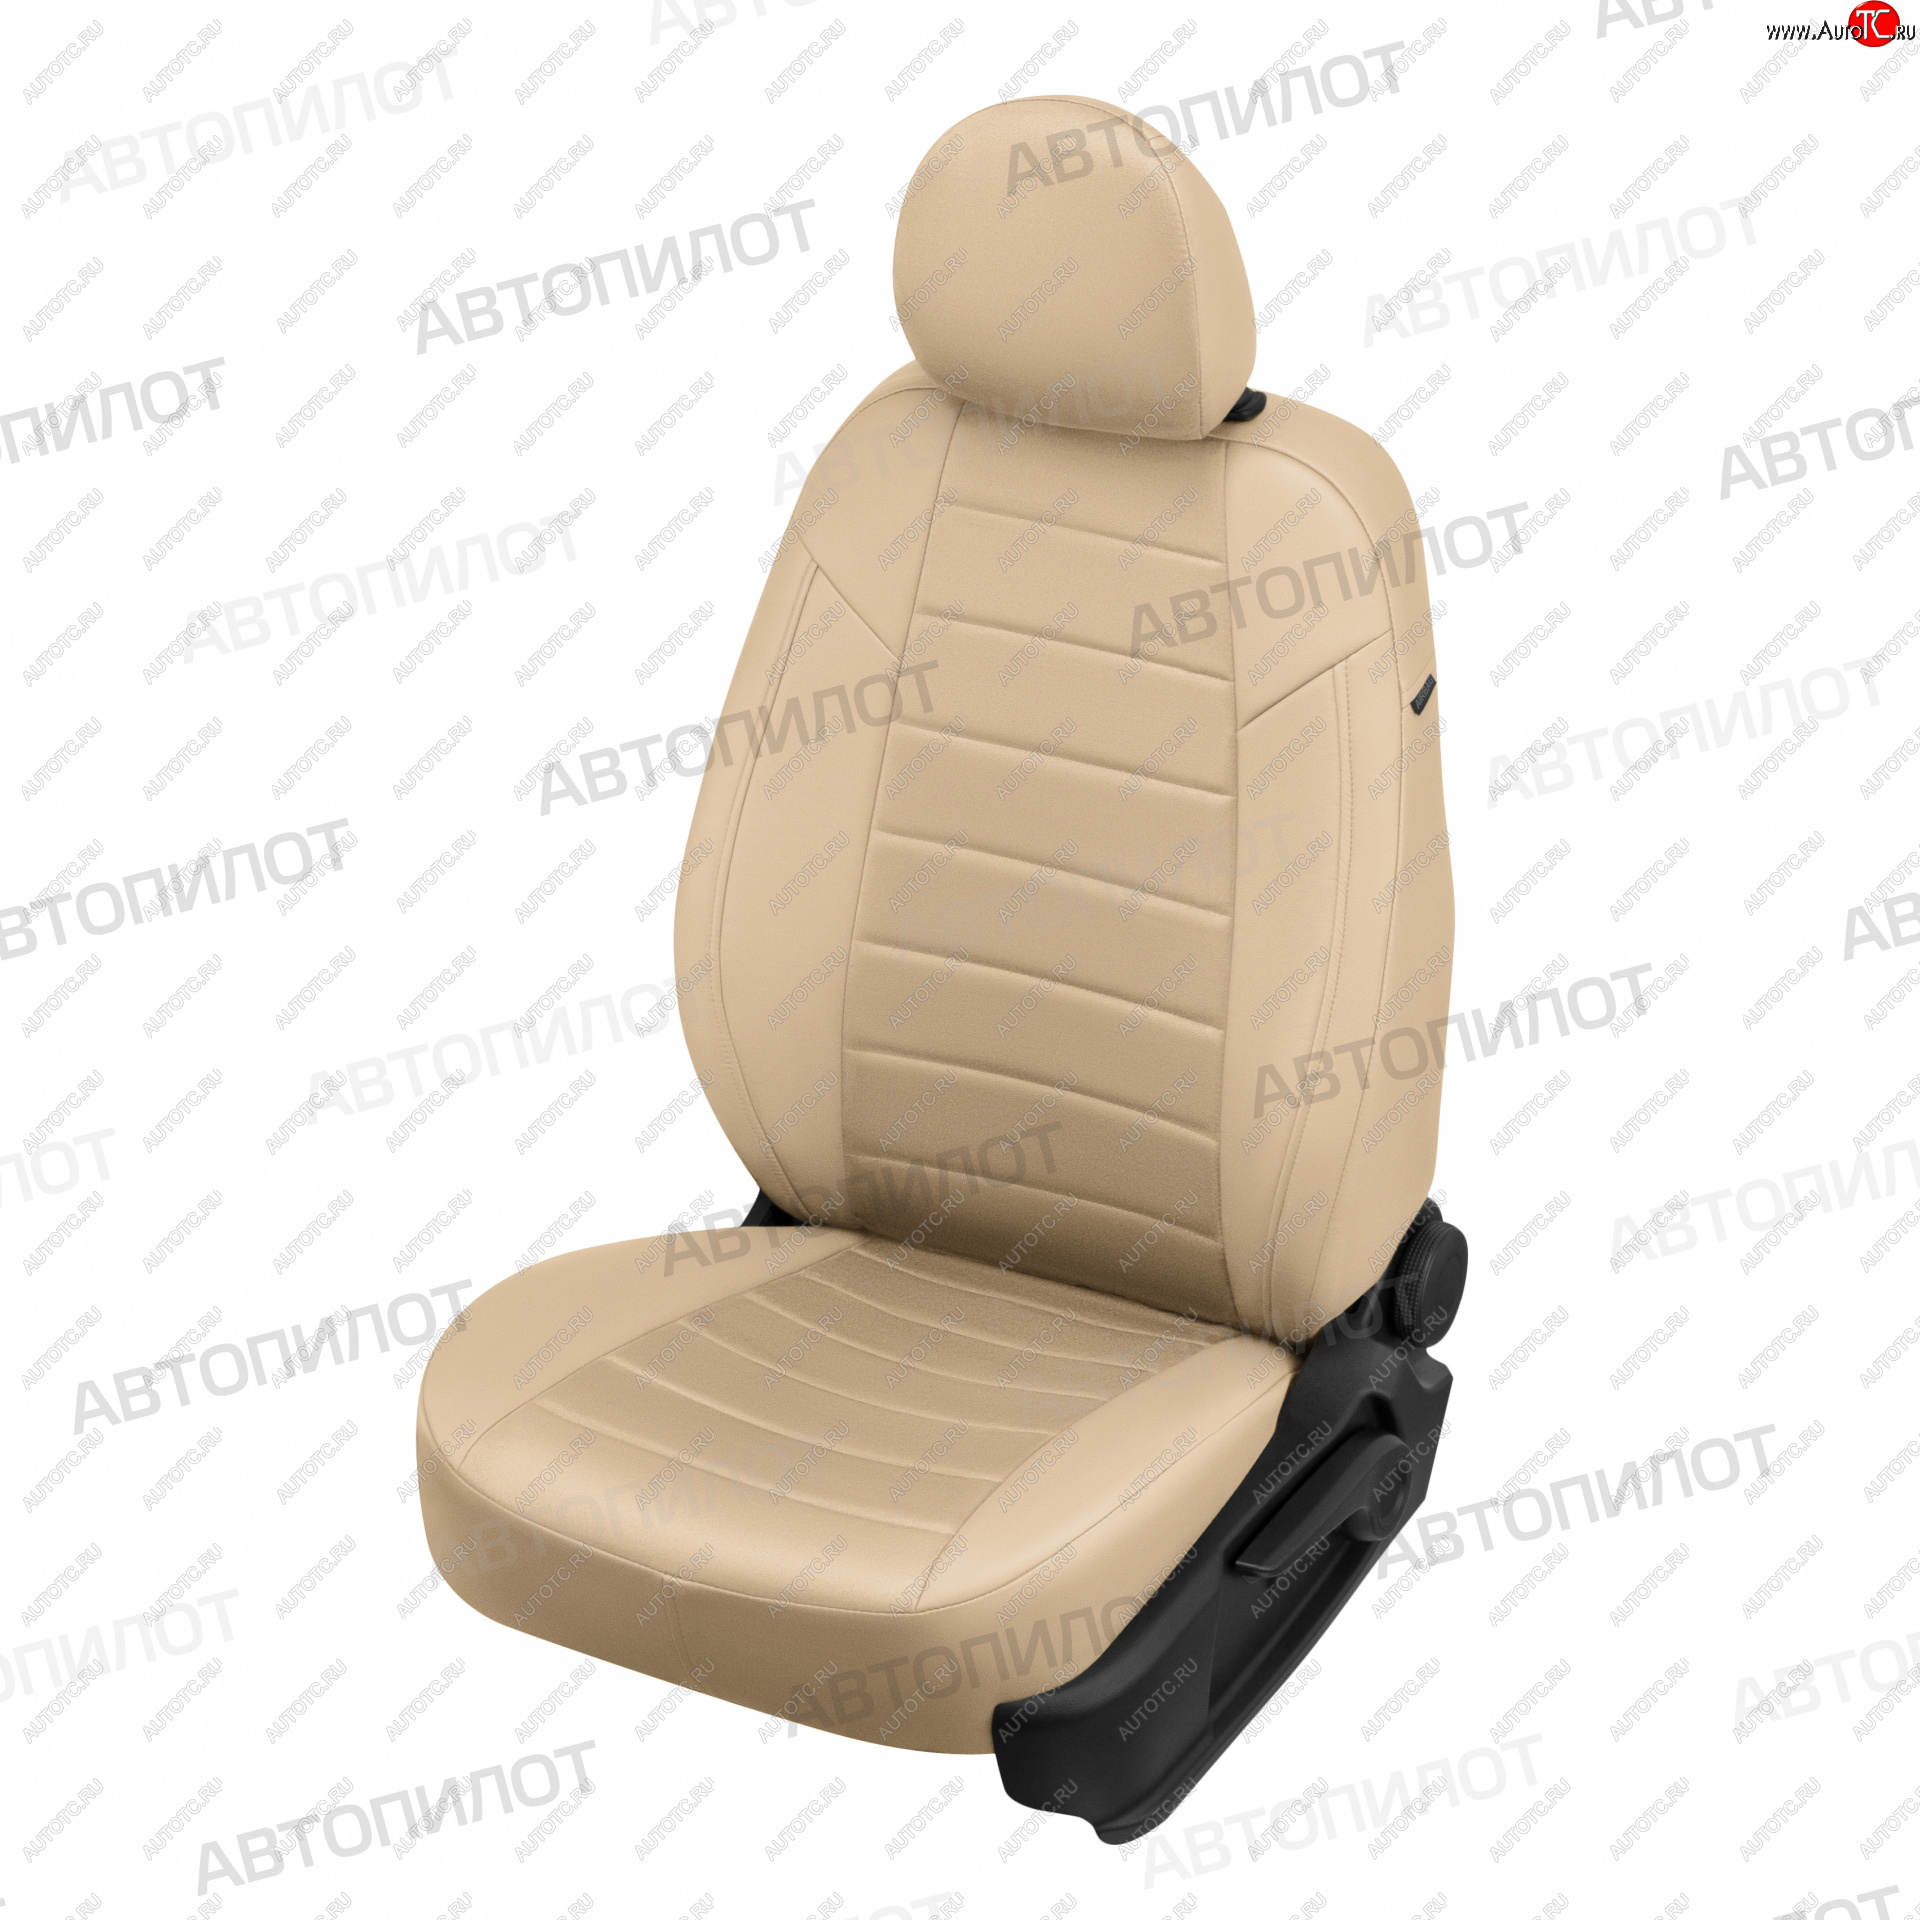 13 449 р. Чехлы сидений (экокожа/алькантара) Автопилот  Daewoo Matiz ( M100,  M150,  M200,  M250,  M300) (1998-2016) (бежевый)